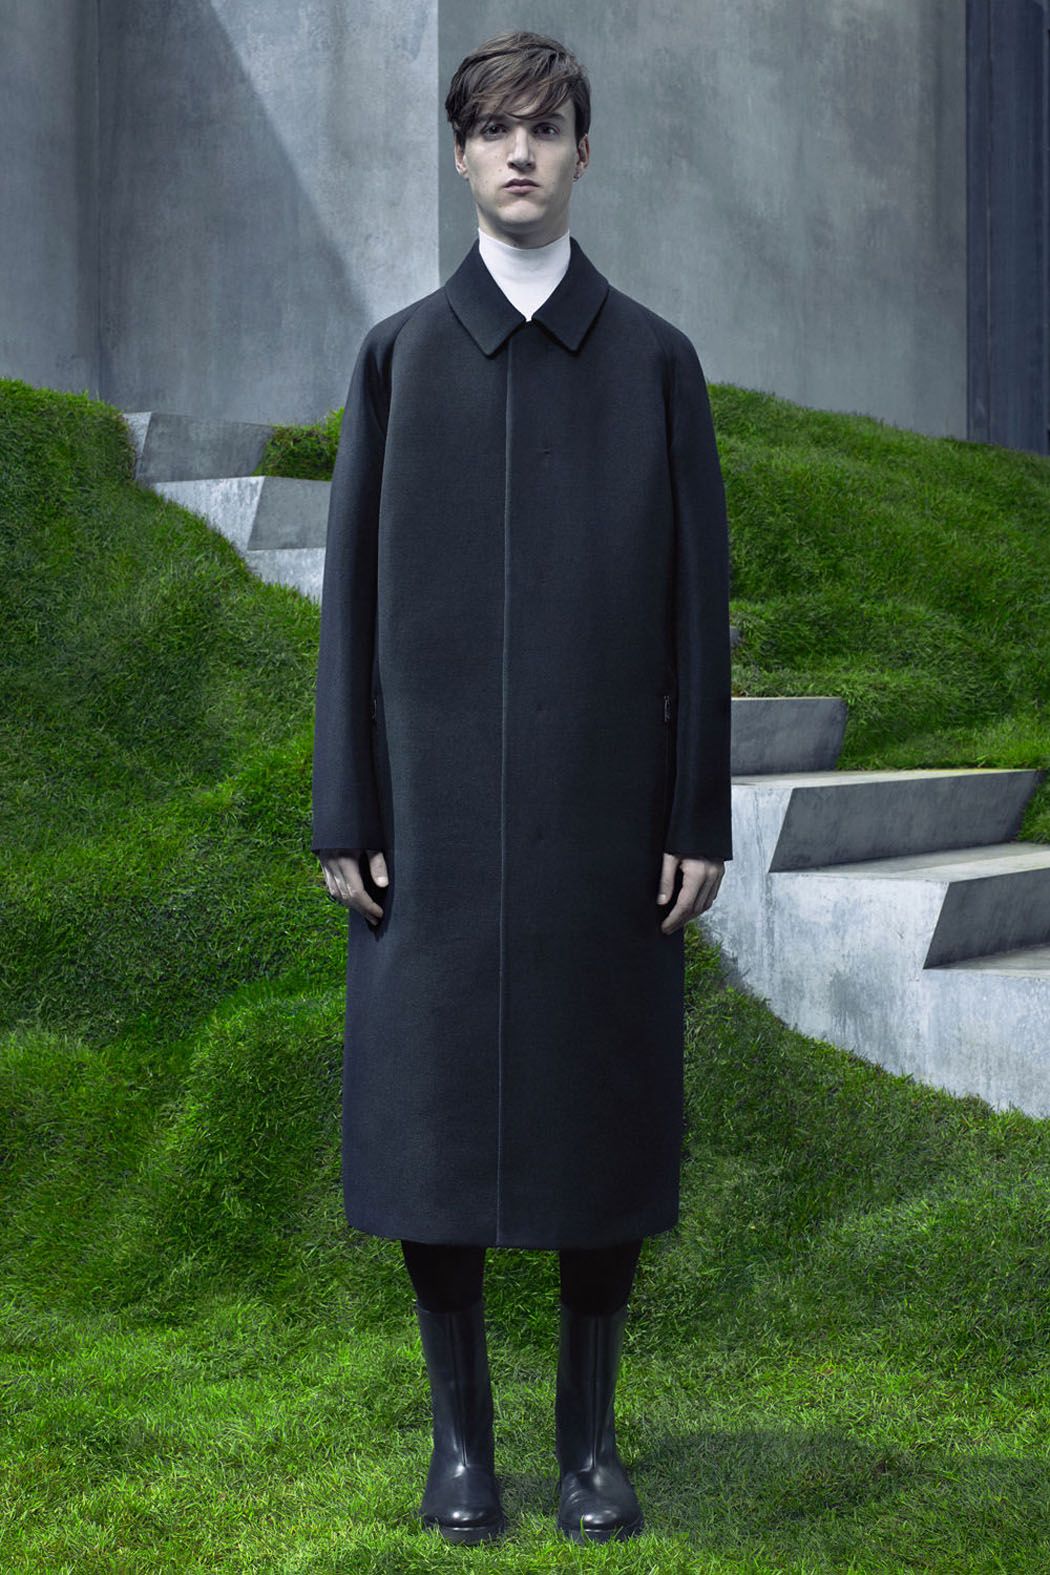 Alexander Wang Designs for Balenciaga, Finding a Minimalist Balance ...